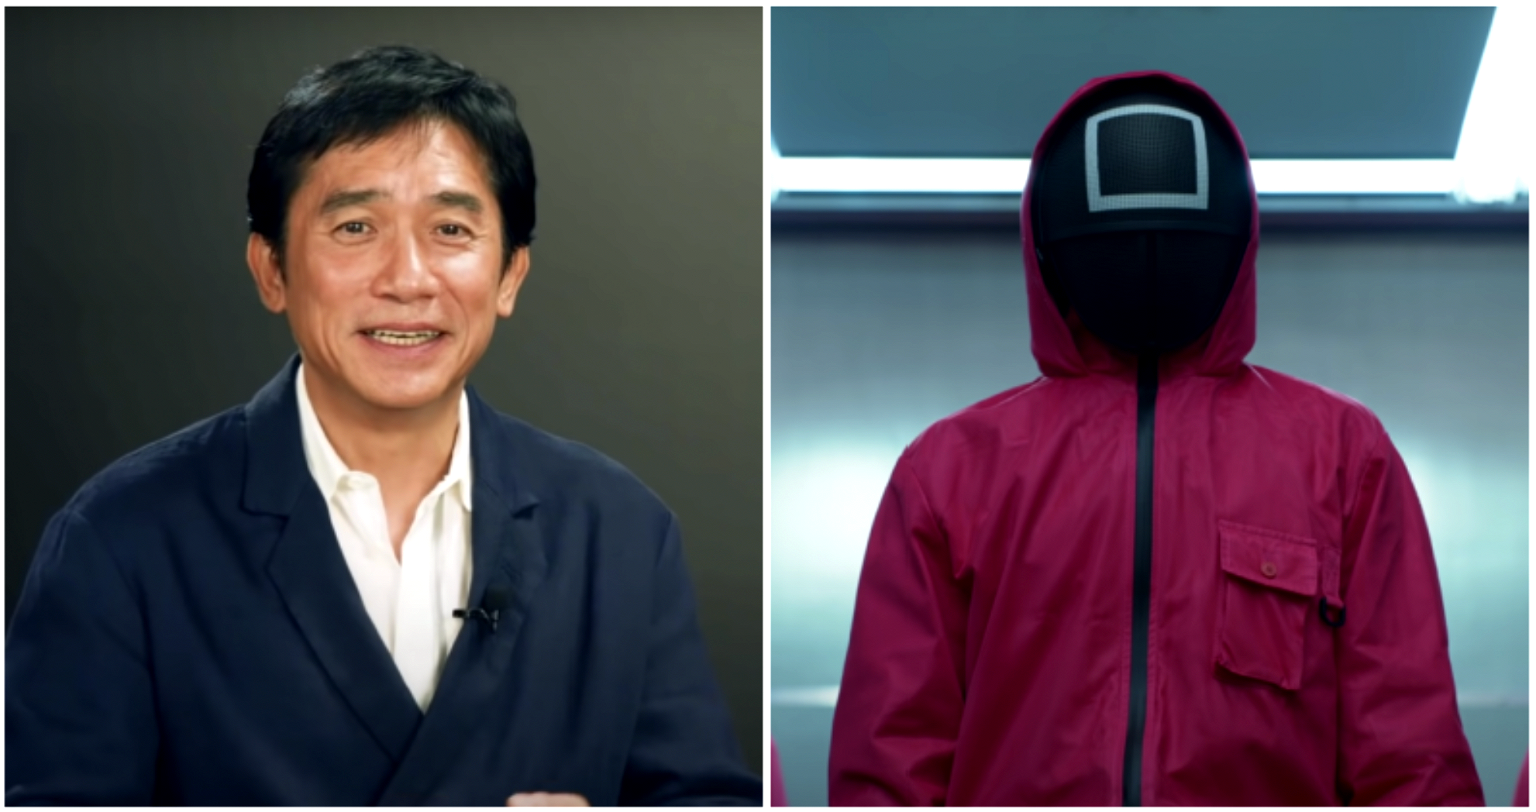 Tony Leung meets ‘Squid Game’ director Hwang Dong-hyuk, sparks Season 2 casting rumors